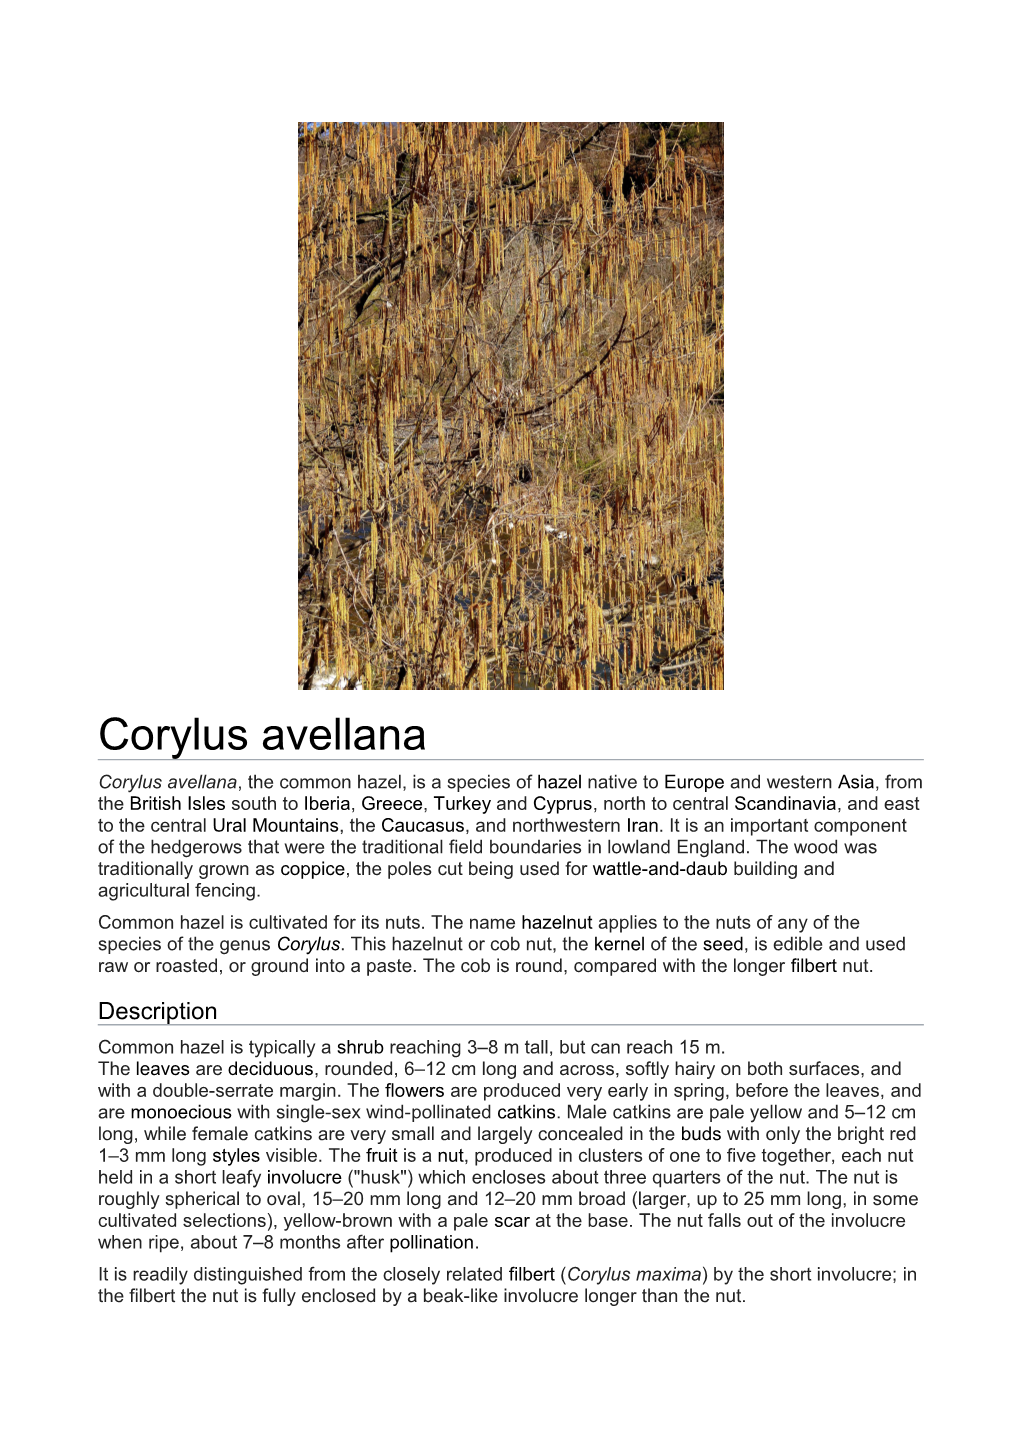 Corylus Avellana